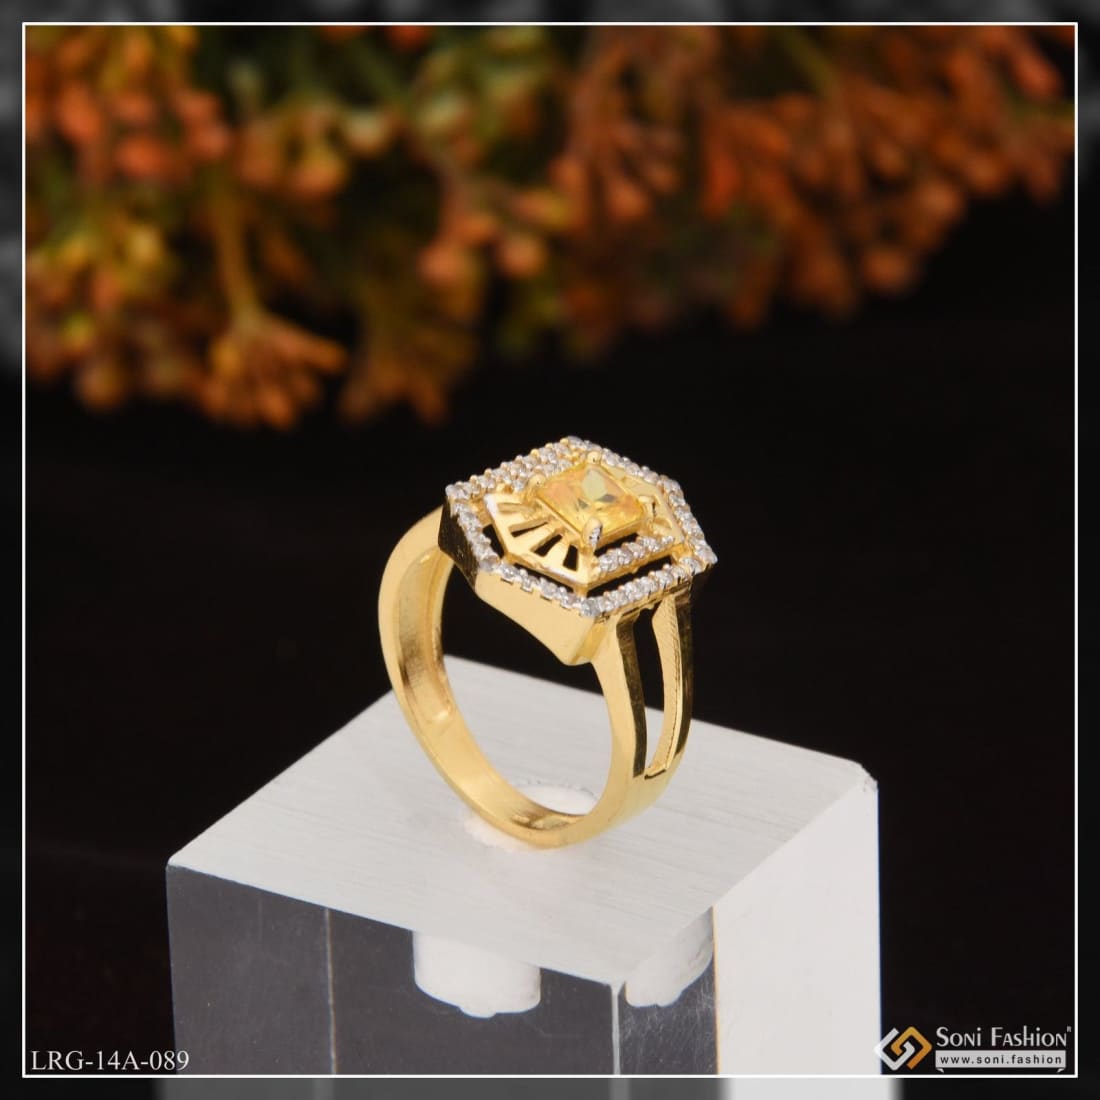 Index Finger Ring Open Ring Women Gift Jewelry Geometric Flash Diamond  Fashion | eBay